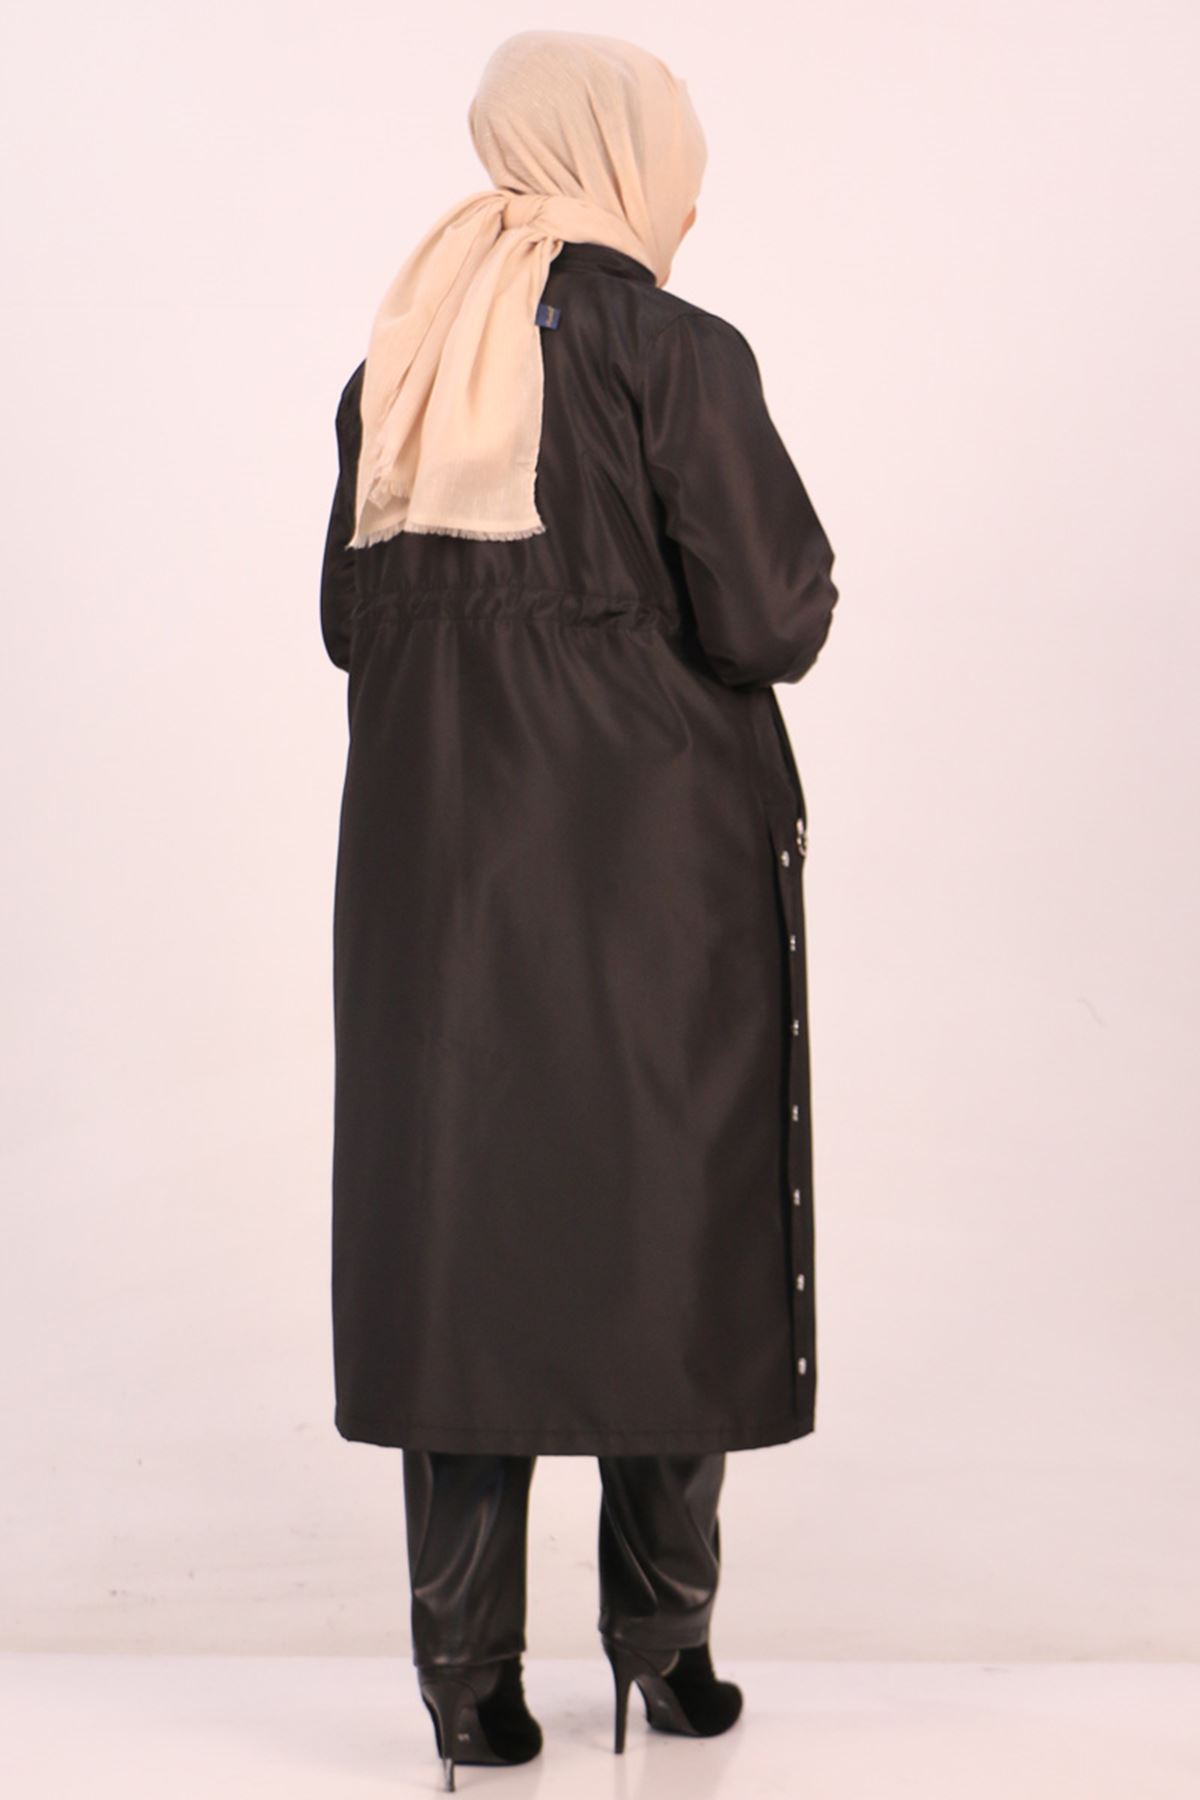 33066 Large Size Judge Collar Inside Fur Bondit Cap-Black